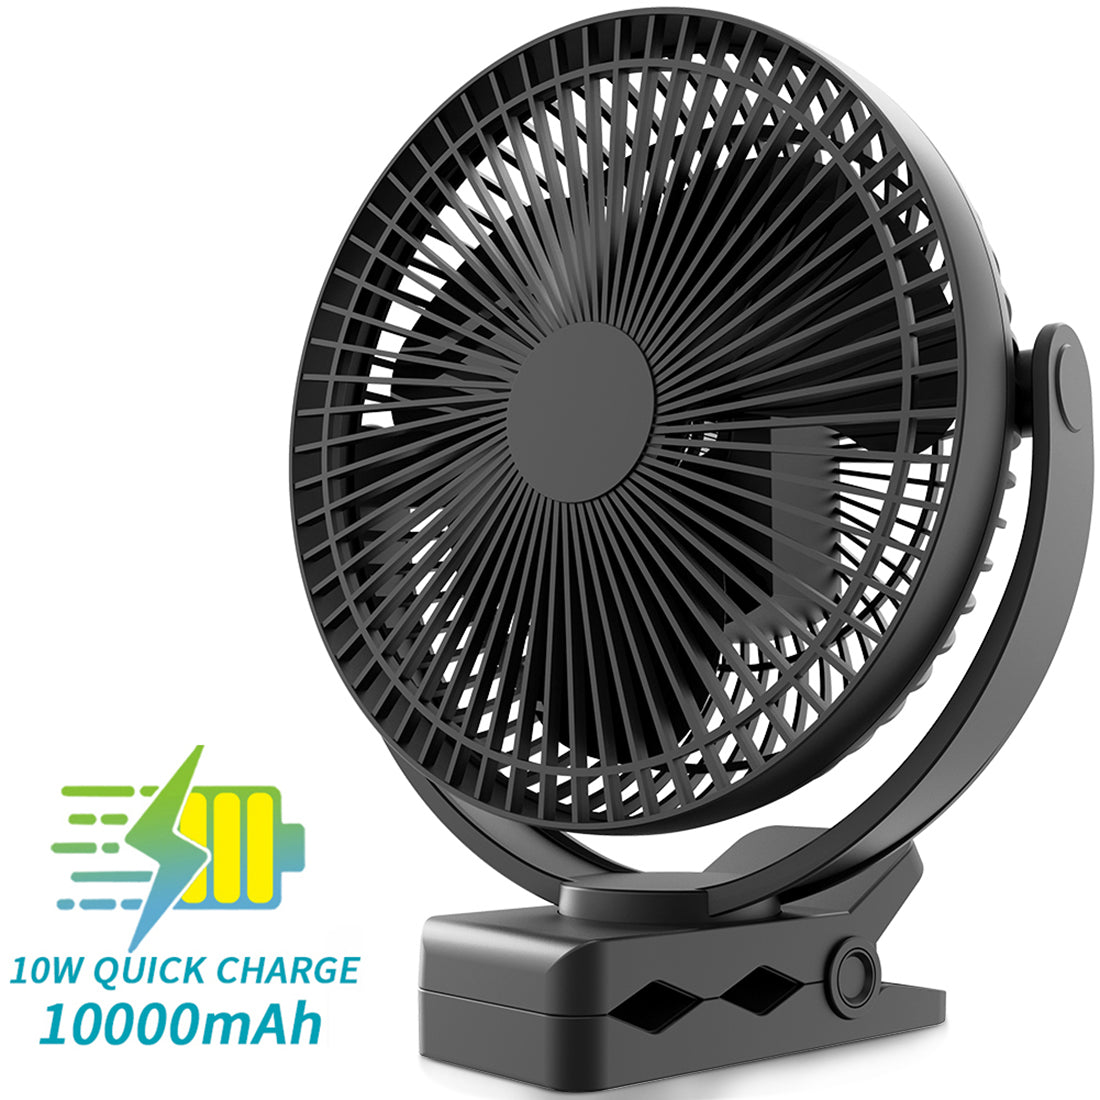 AWANFI 10000mAh Battery Operated Oscillating Fan with Remote